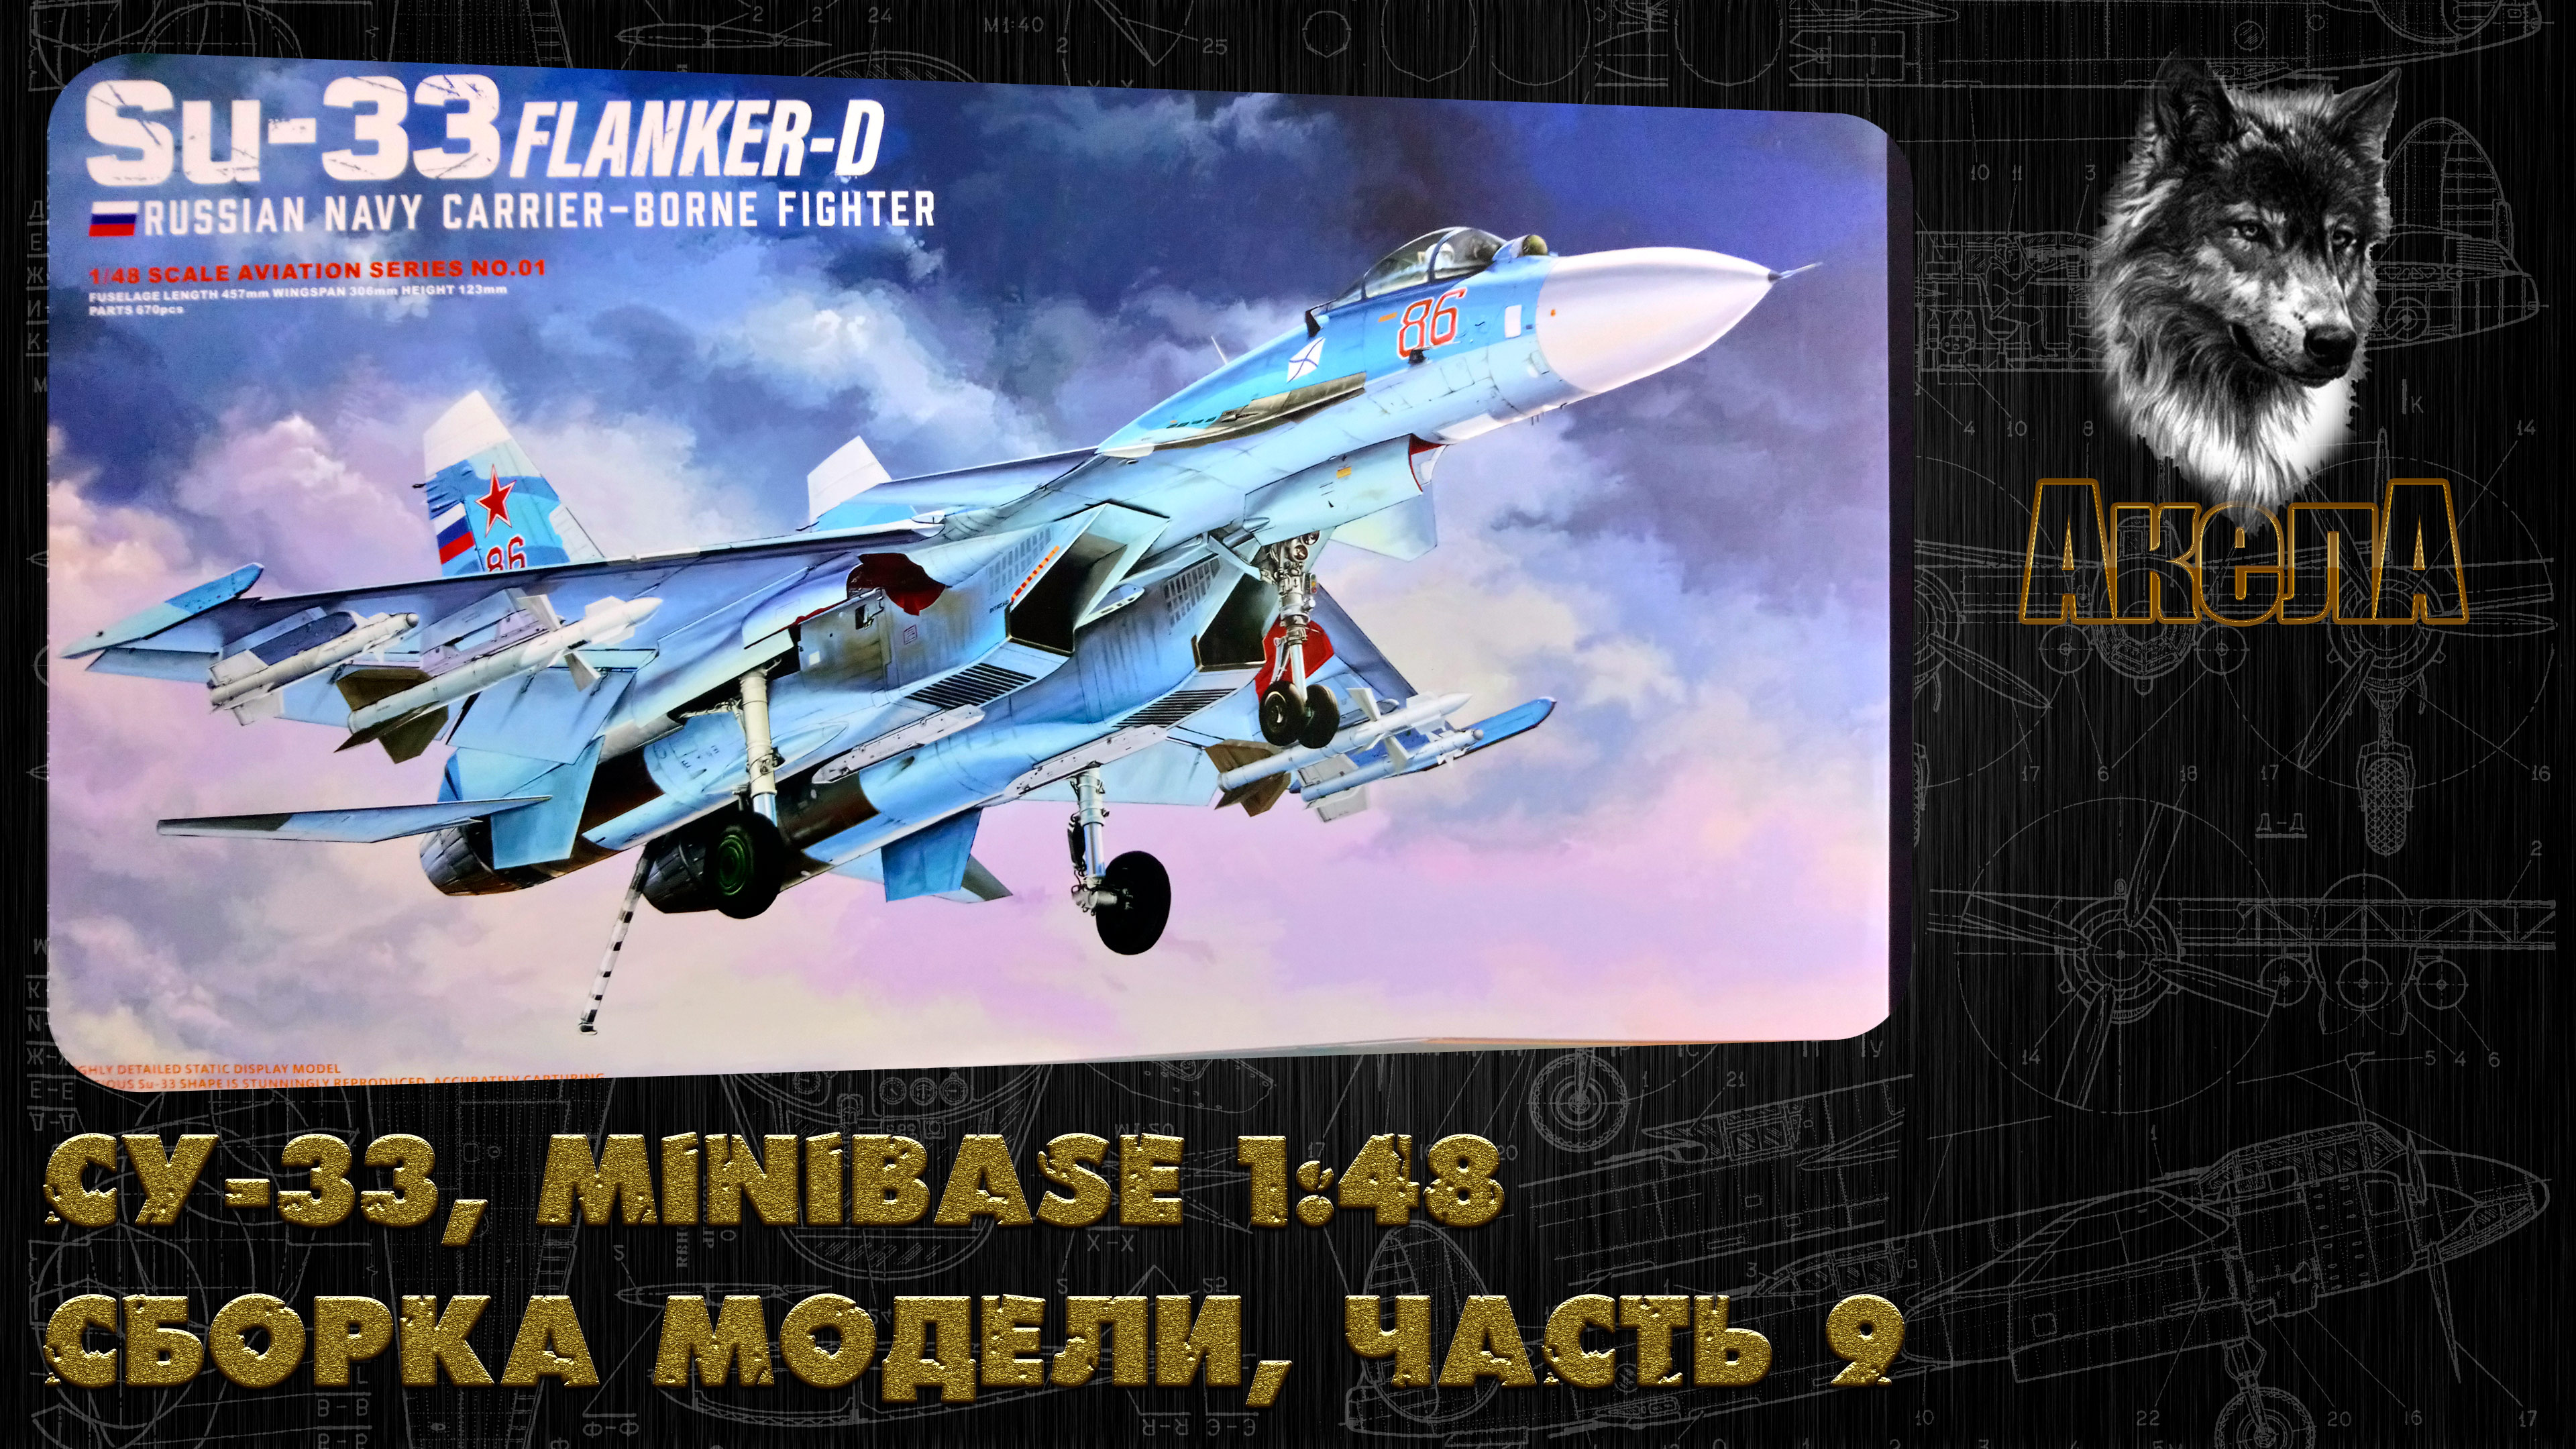 Су-33, Minibase 1/48, сборка модели, часть 9